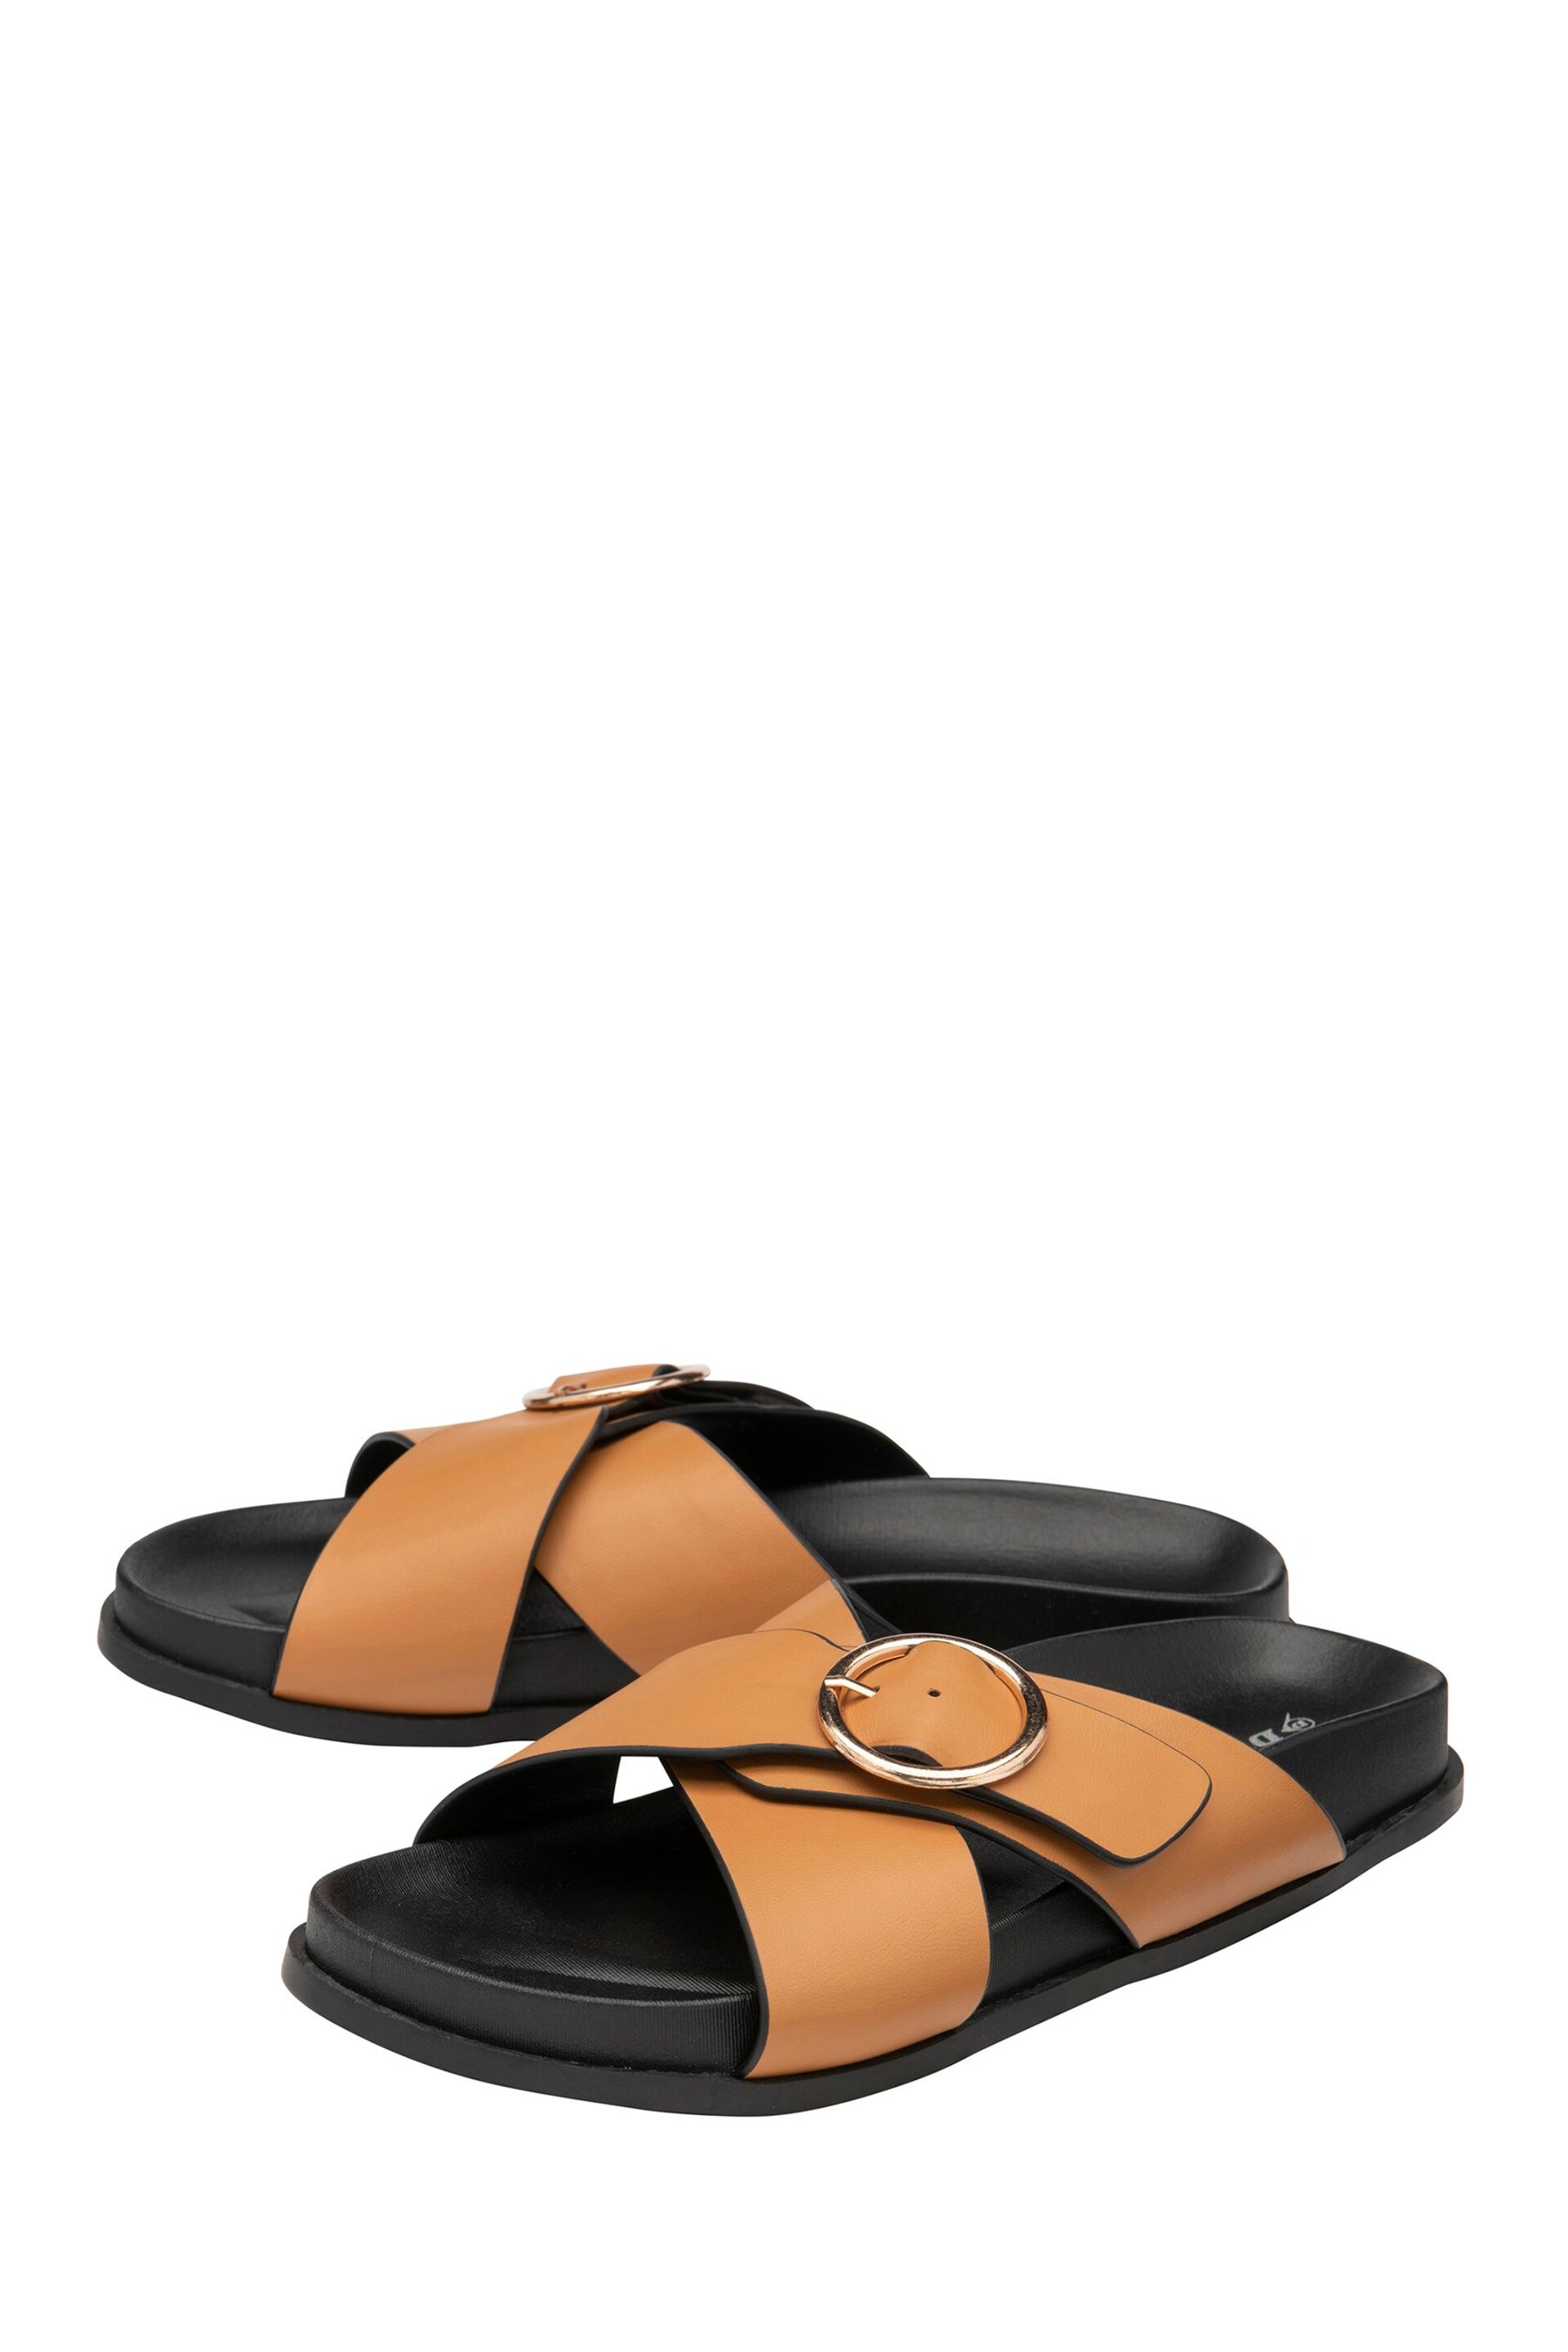 Dunlop Brown Open-Toe Mule Sandals - Image 2 of 4